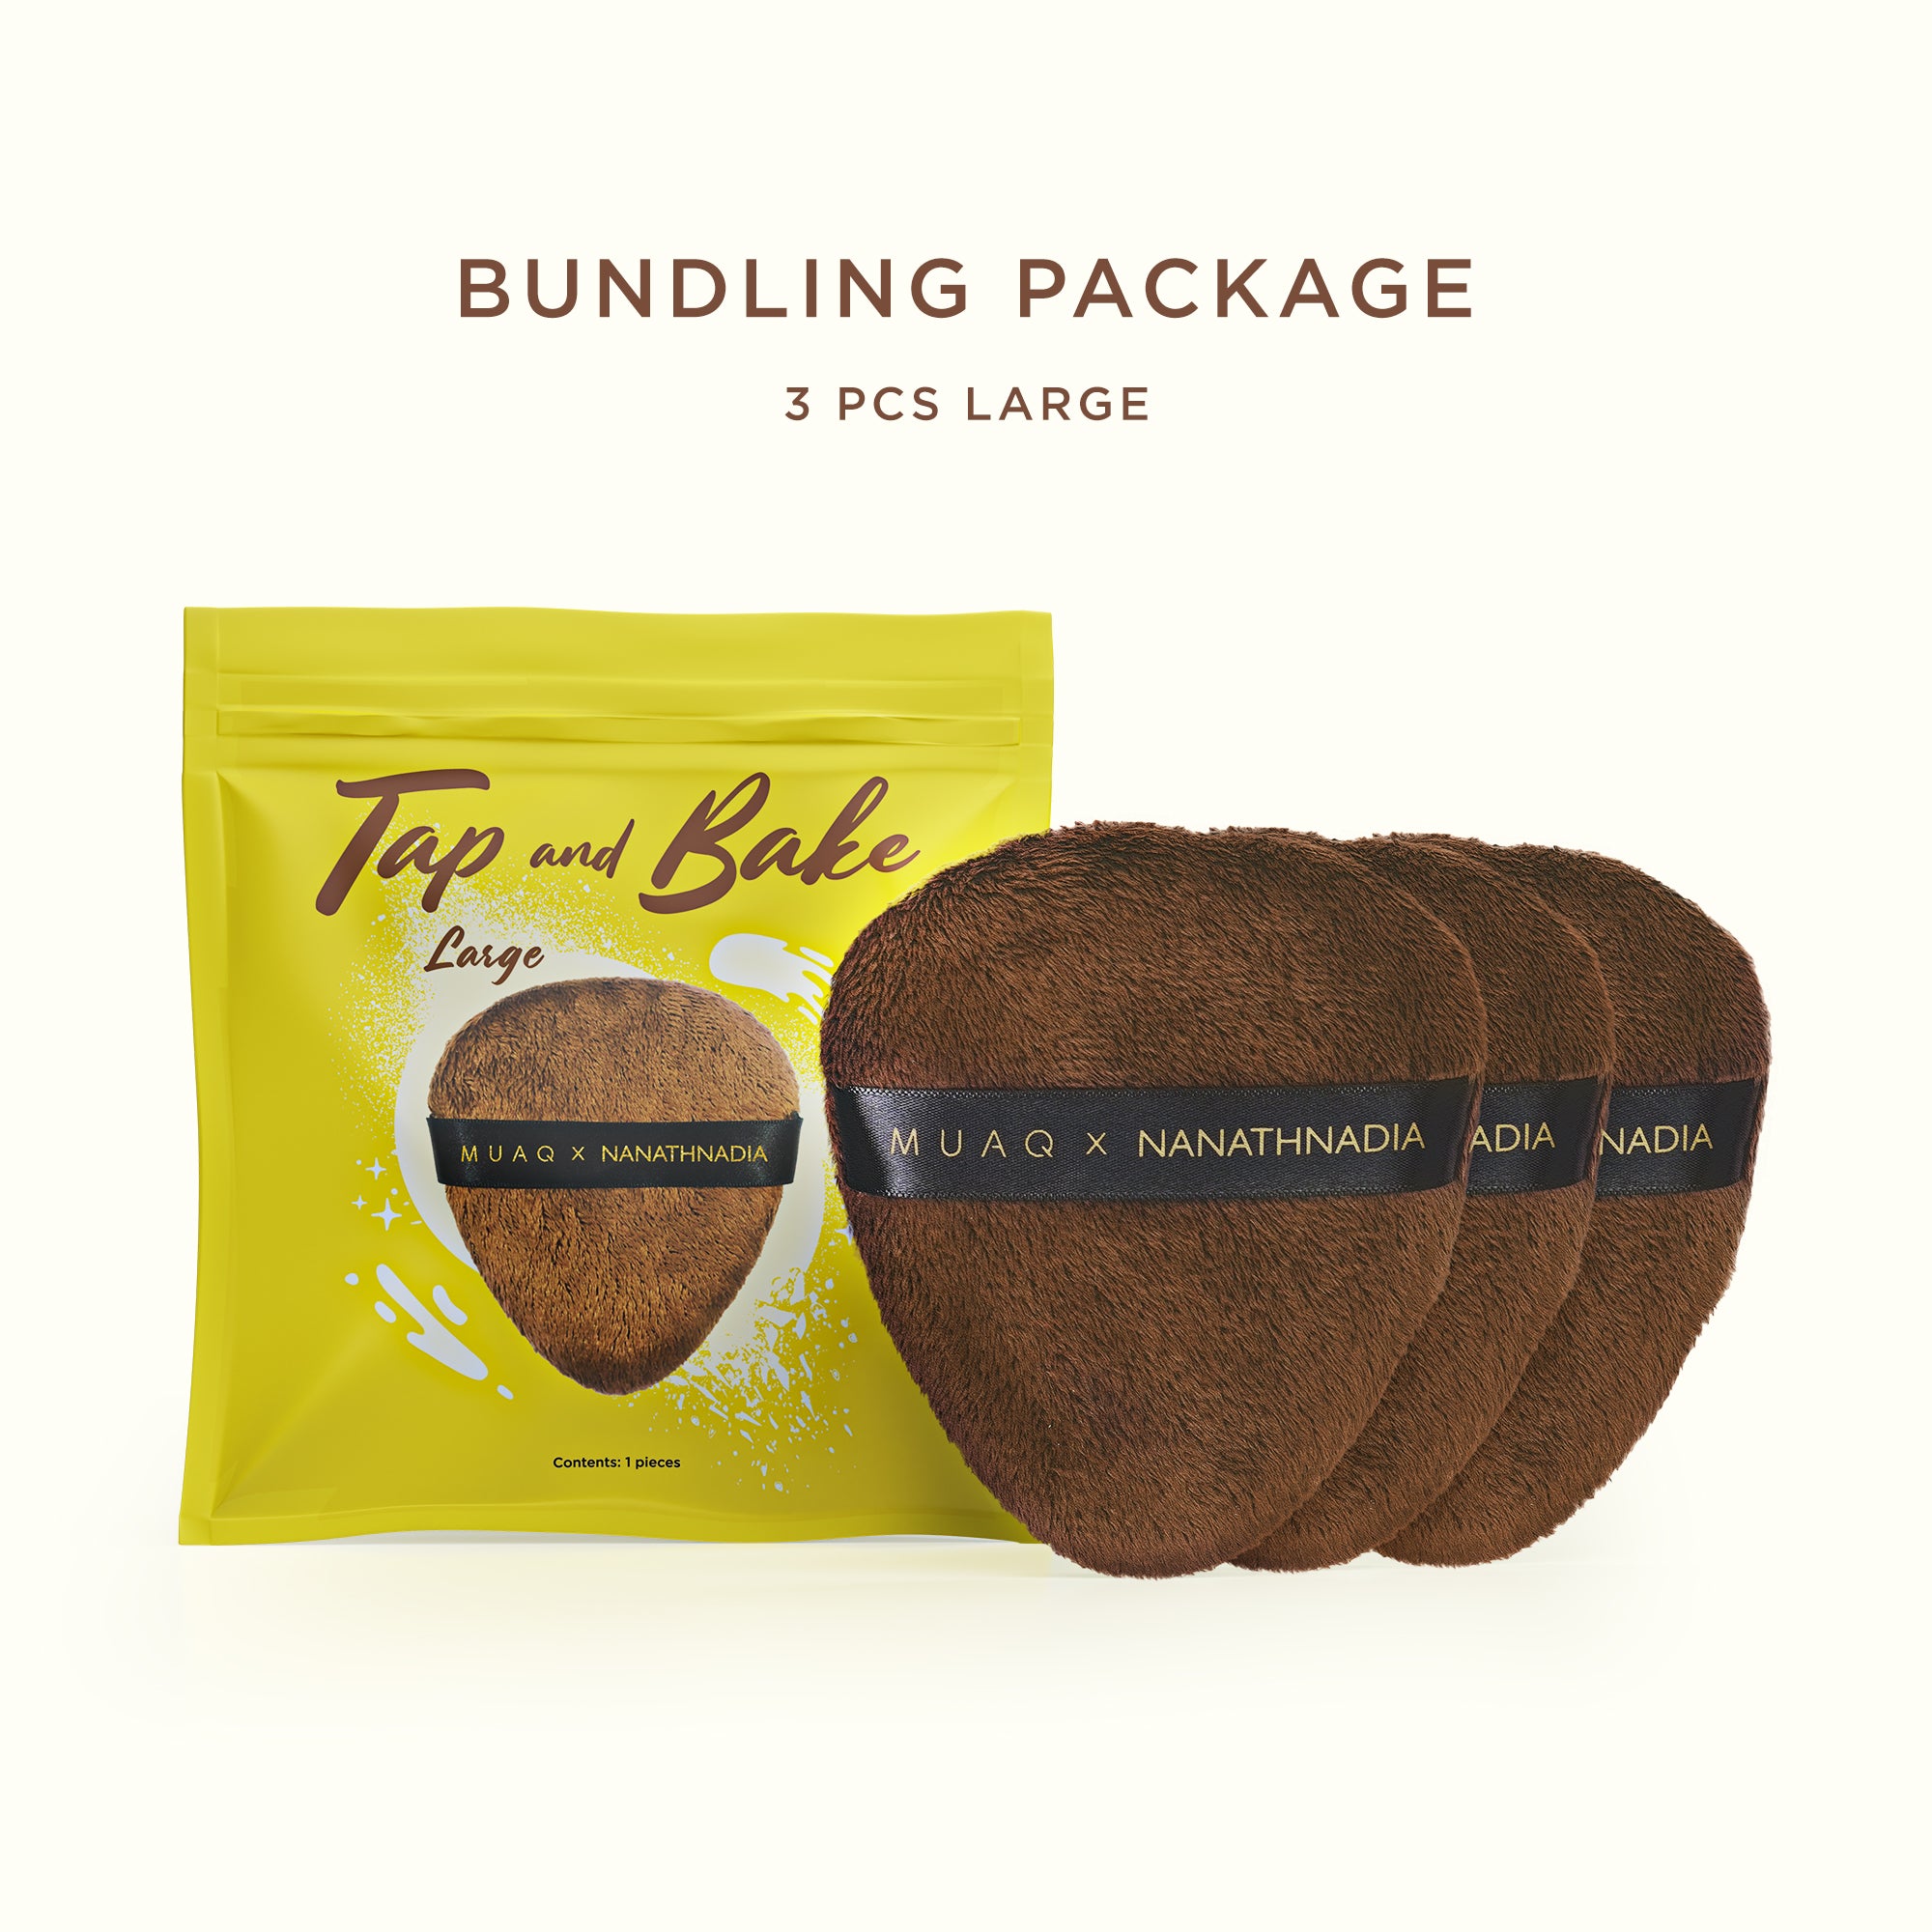 Bundling Package TAP and BAKE by MUAQ X NANATHNADIA (3 PCS LARGE)